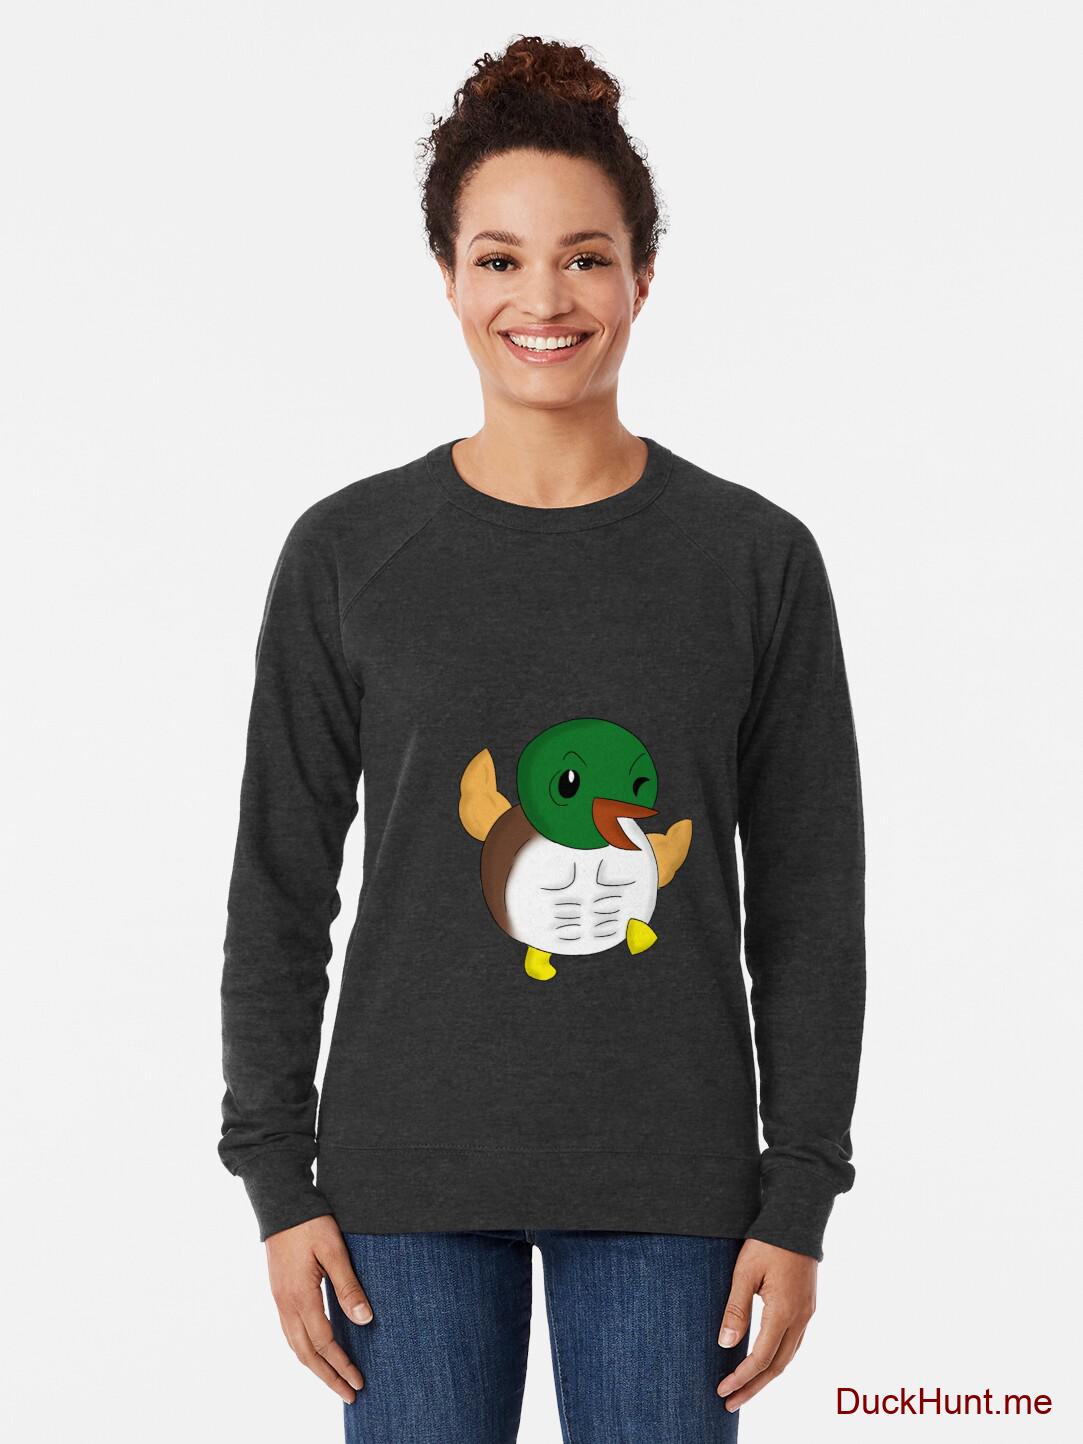 Super duck Charcoal Lightweight Sweatshirt alternative image 1